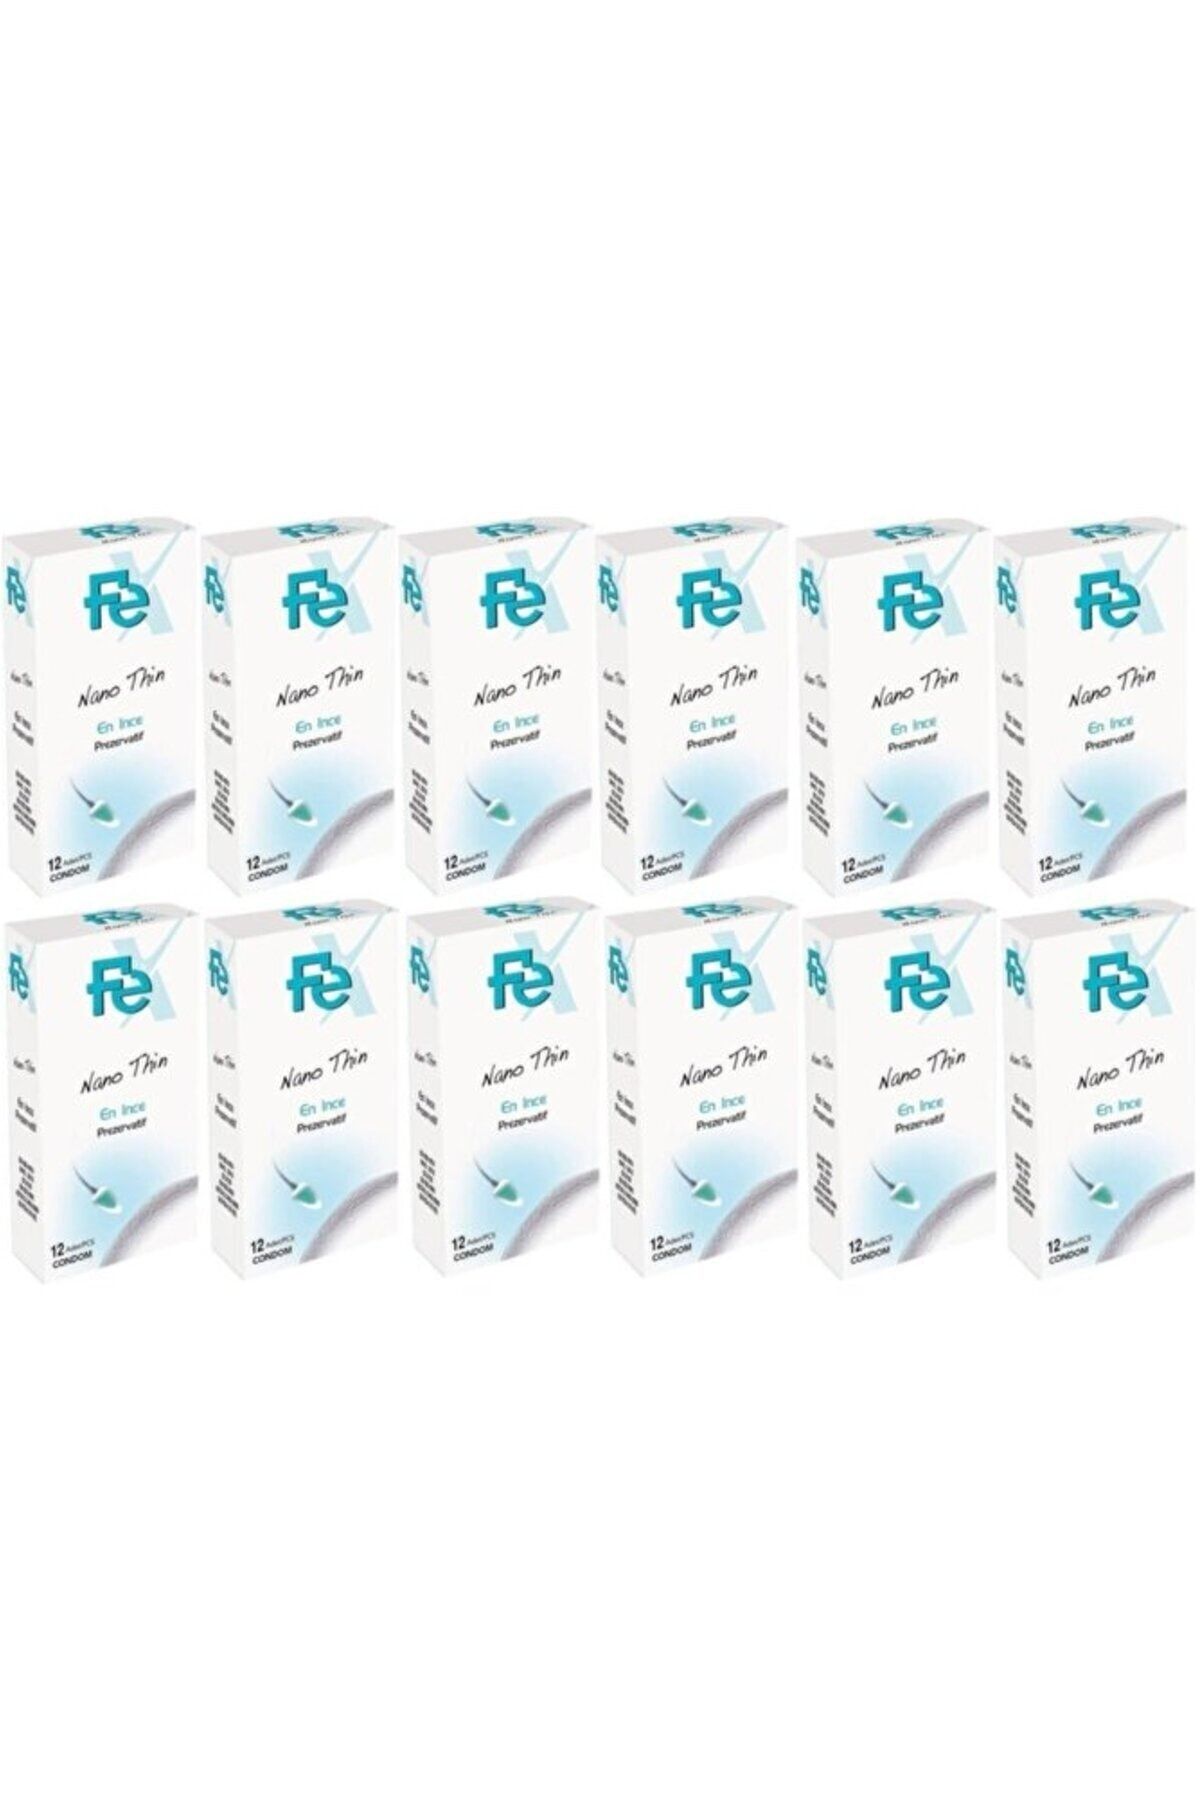 Fe Nano Thin Kondom En Ince Prezervatif 12 Li 12 Paket (144 Adet)